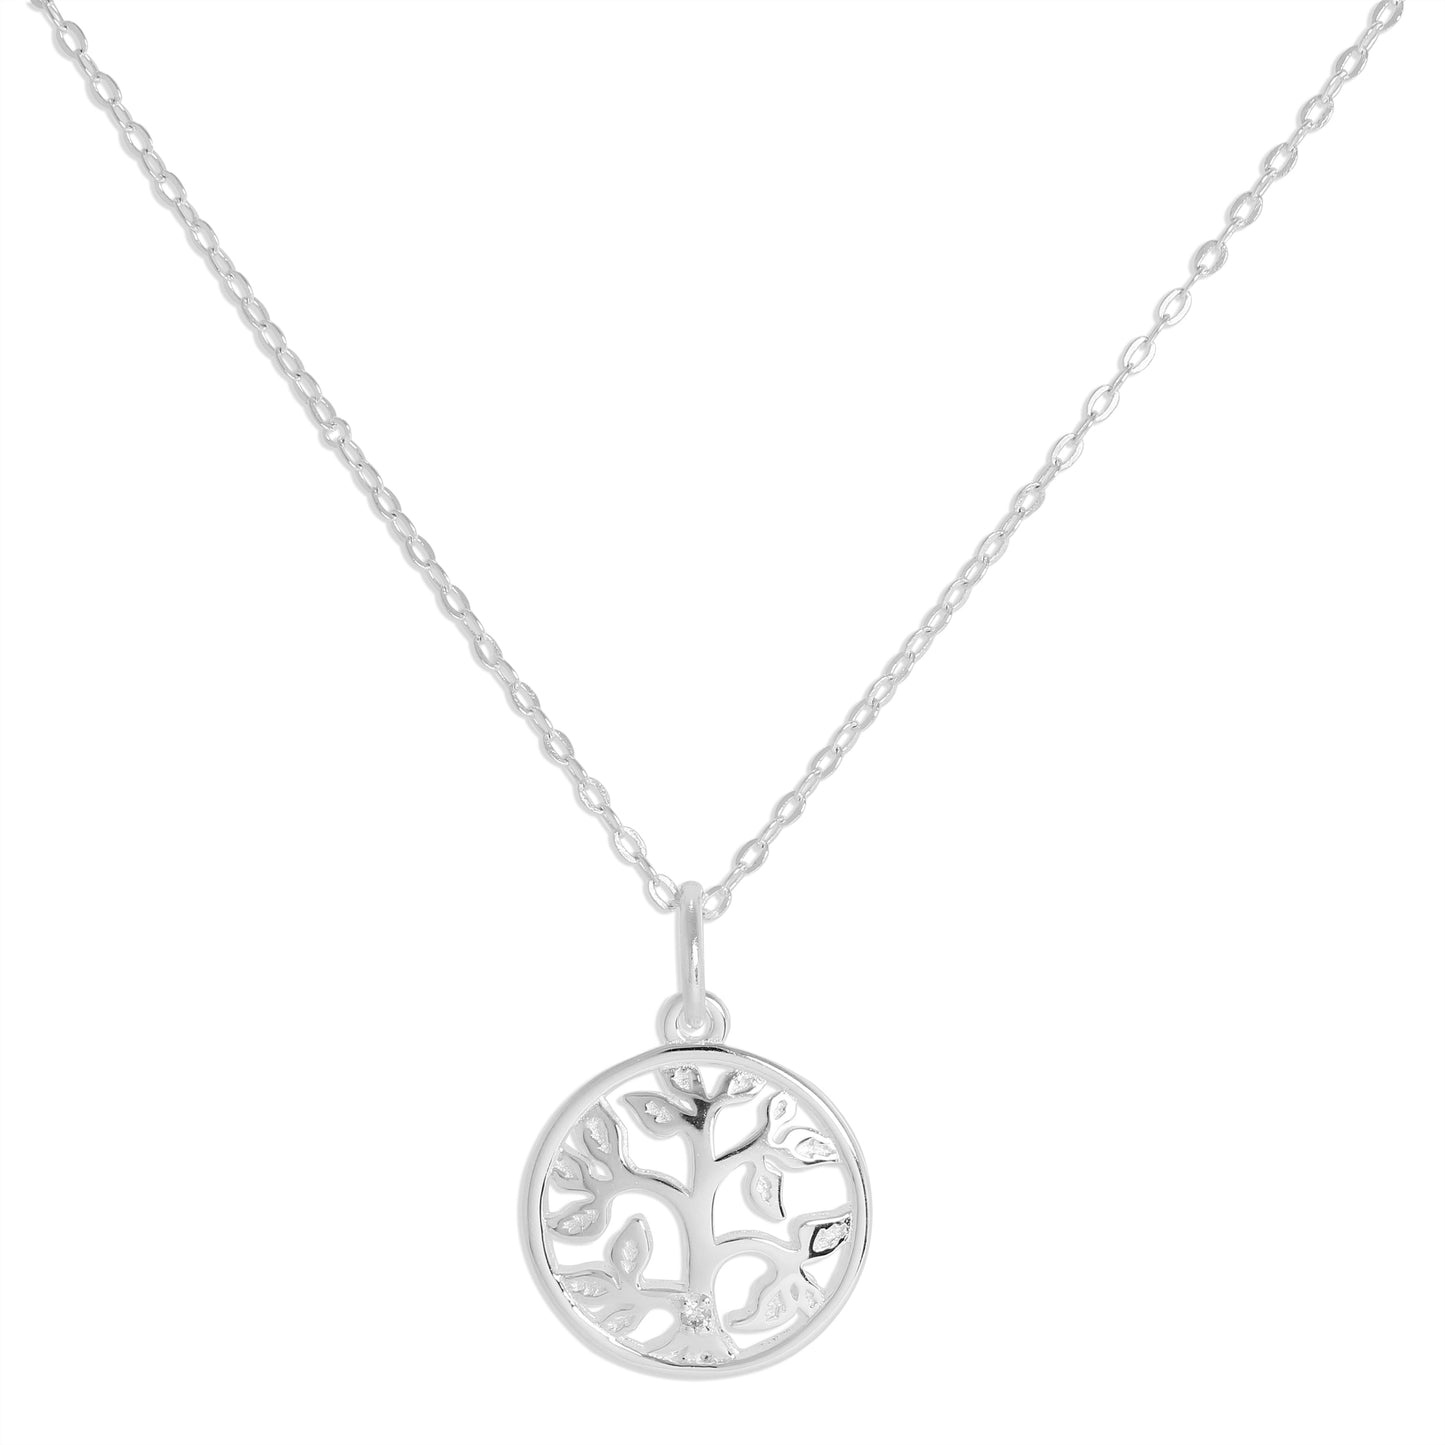 Sterling Silver & Genuine Diamond Tree of Life Necklace